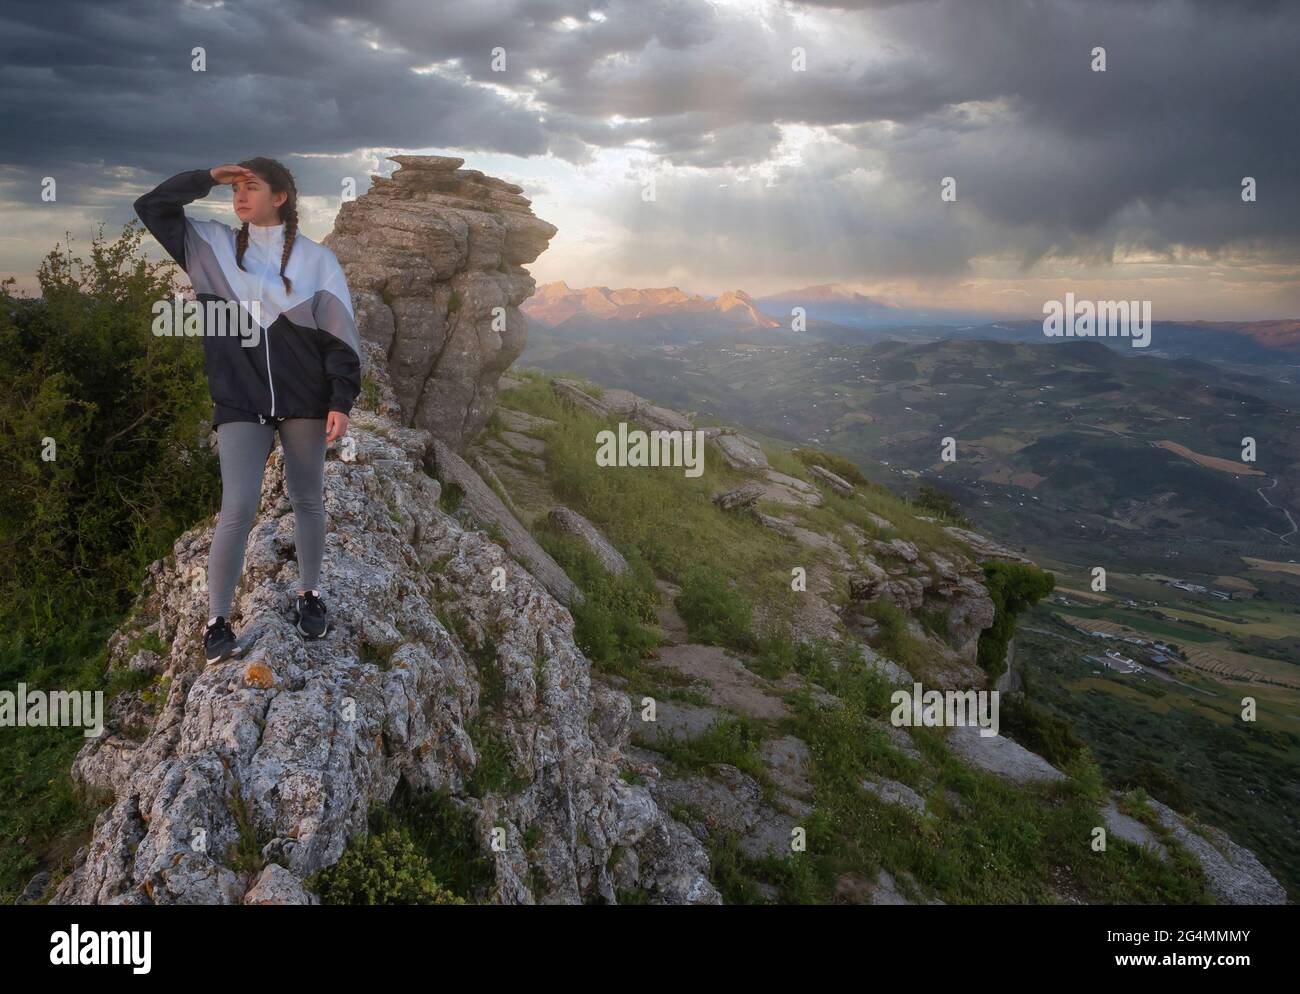 Mujer con chubasquero en el borde de un acantilado con vistas a un valle en un día lluvioso y húmedo. Imagen conceptual de tonos exteriores.Torcal de Antequera,España. Foto de stock